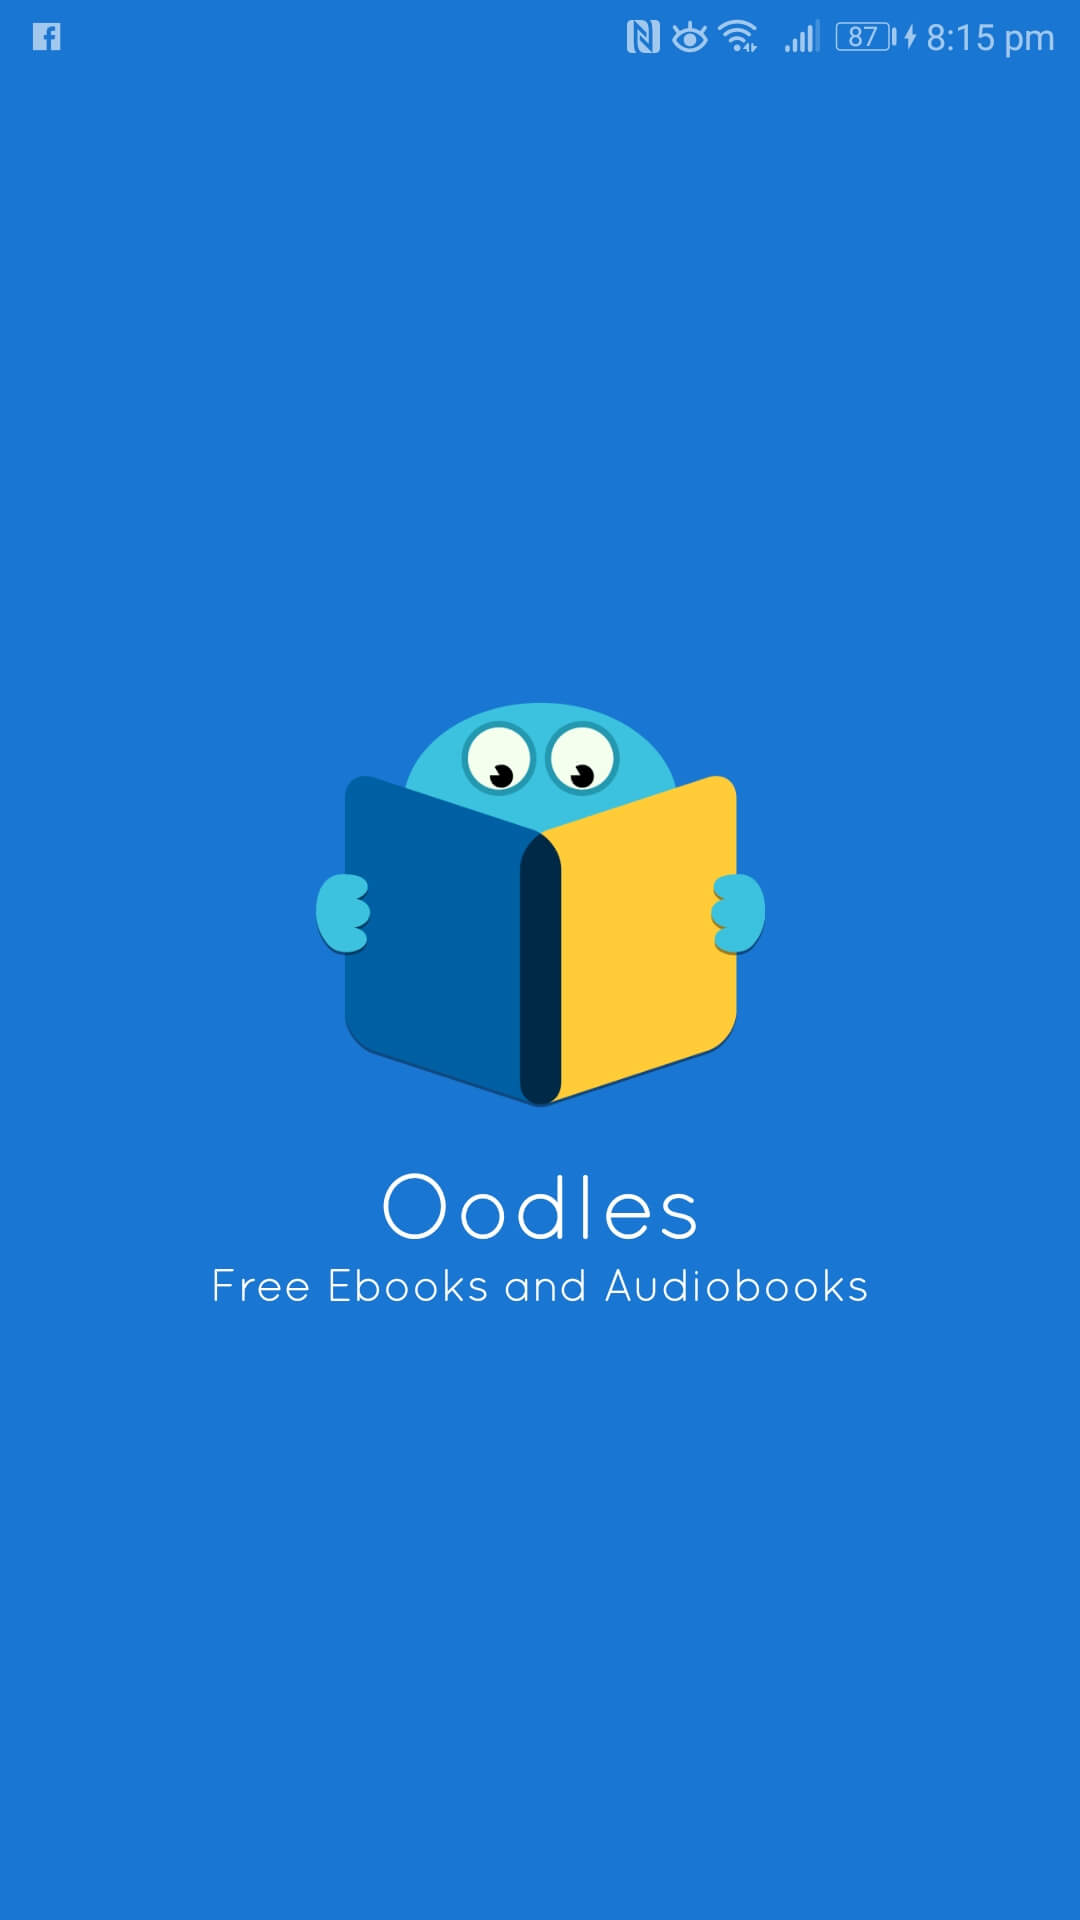 free ebooks for junior reading